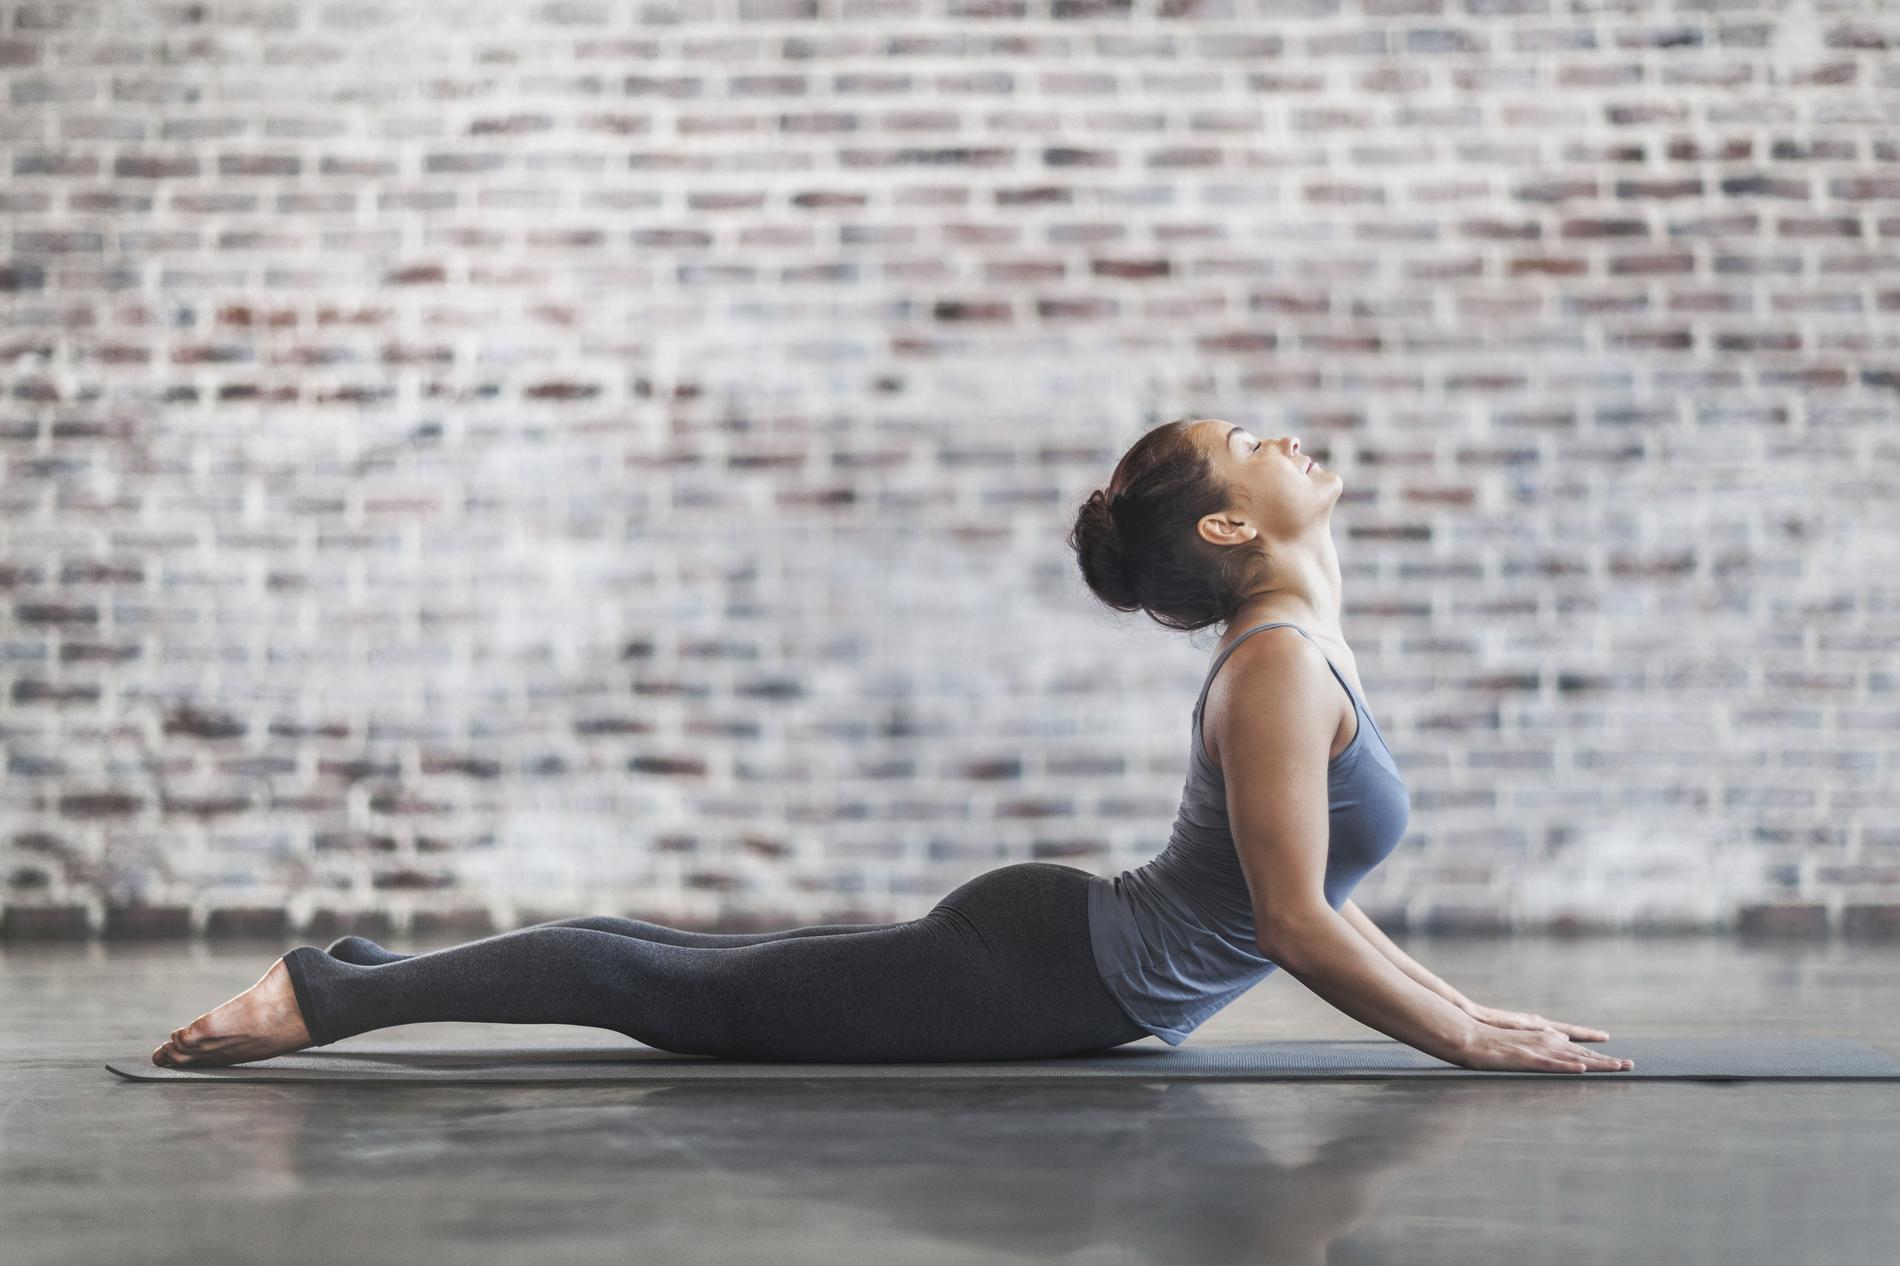 Sept Exercices De Yoga Pour Faciliter La Digestion Madame Figaro 